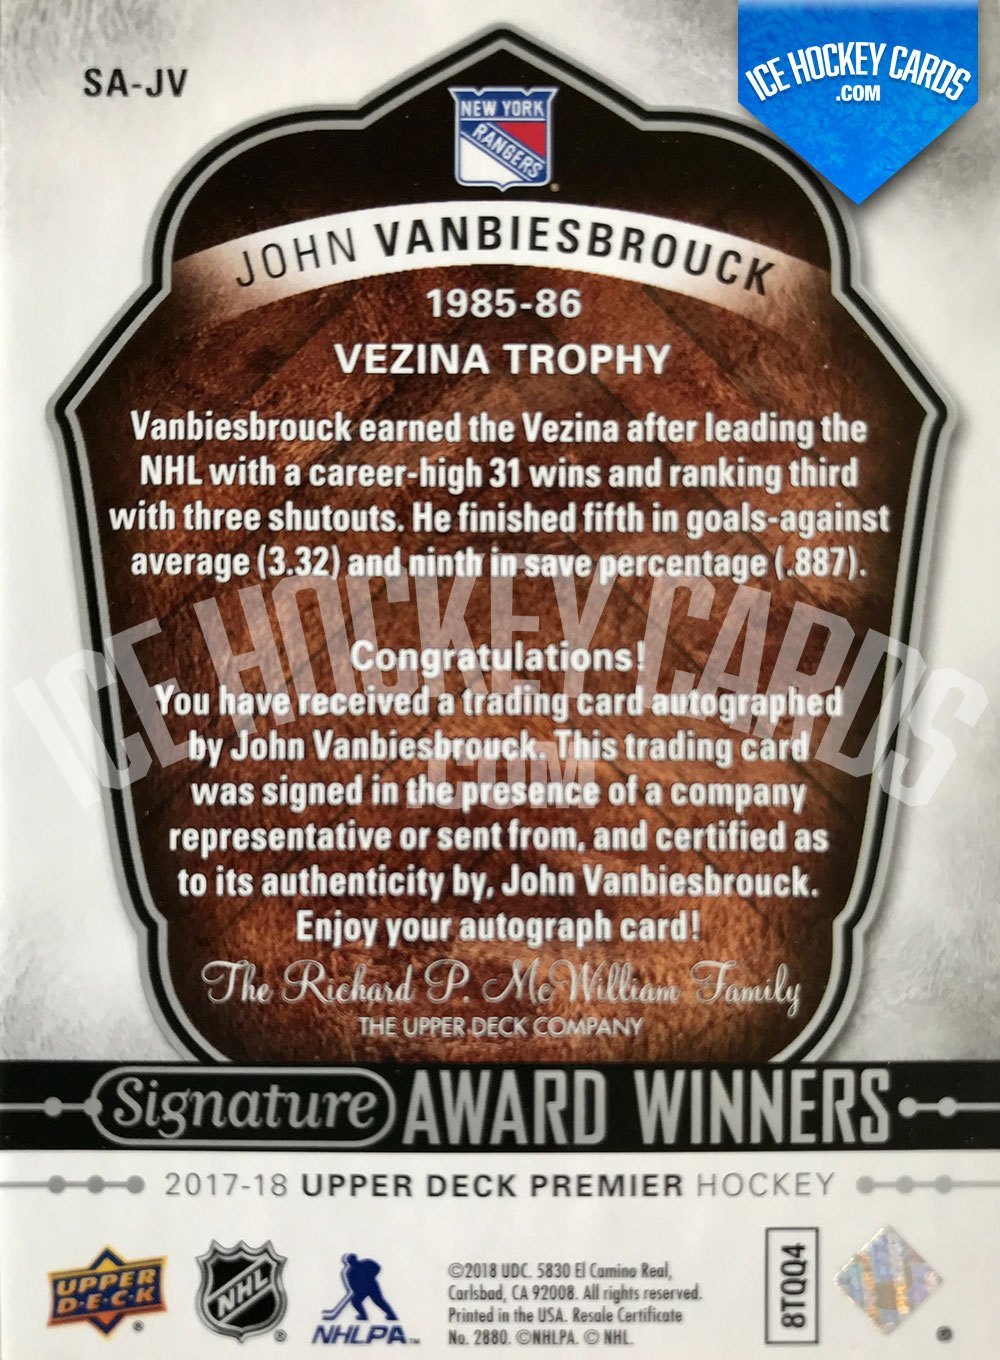 Upper Deck - Premier Hockey 2017-18 - John Vanbiesbrouck Signature Award Winners - Vezina Trophy 1985-86 New York Rangers back